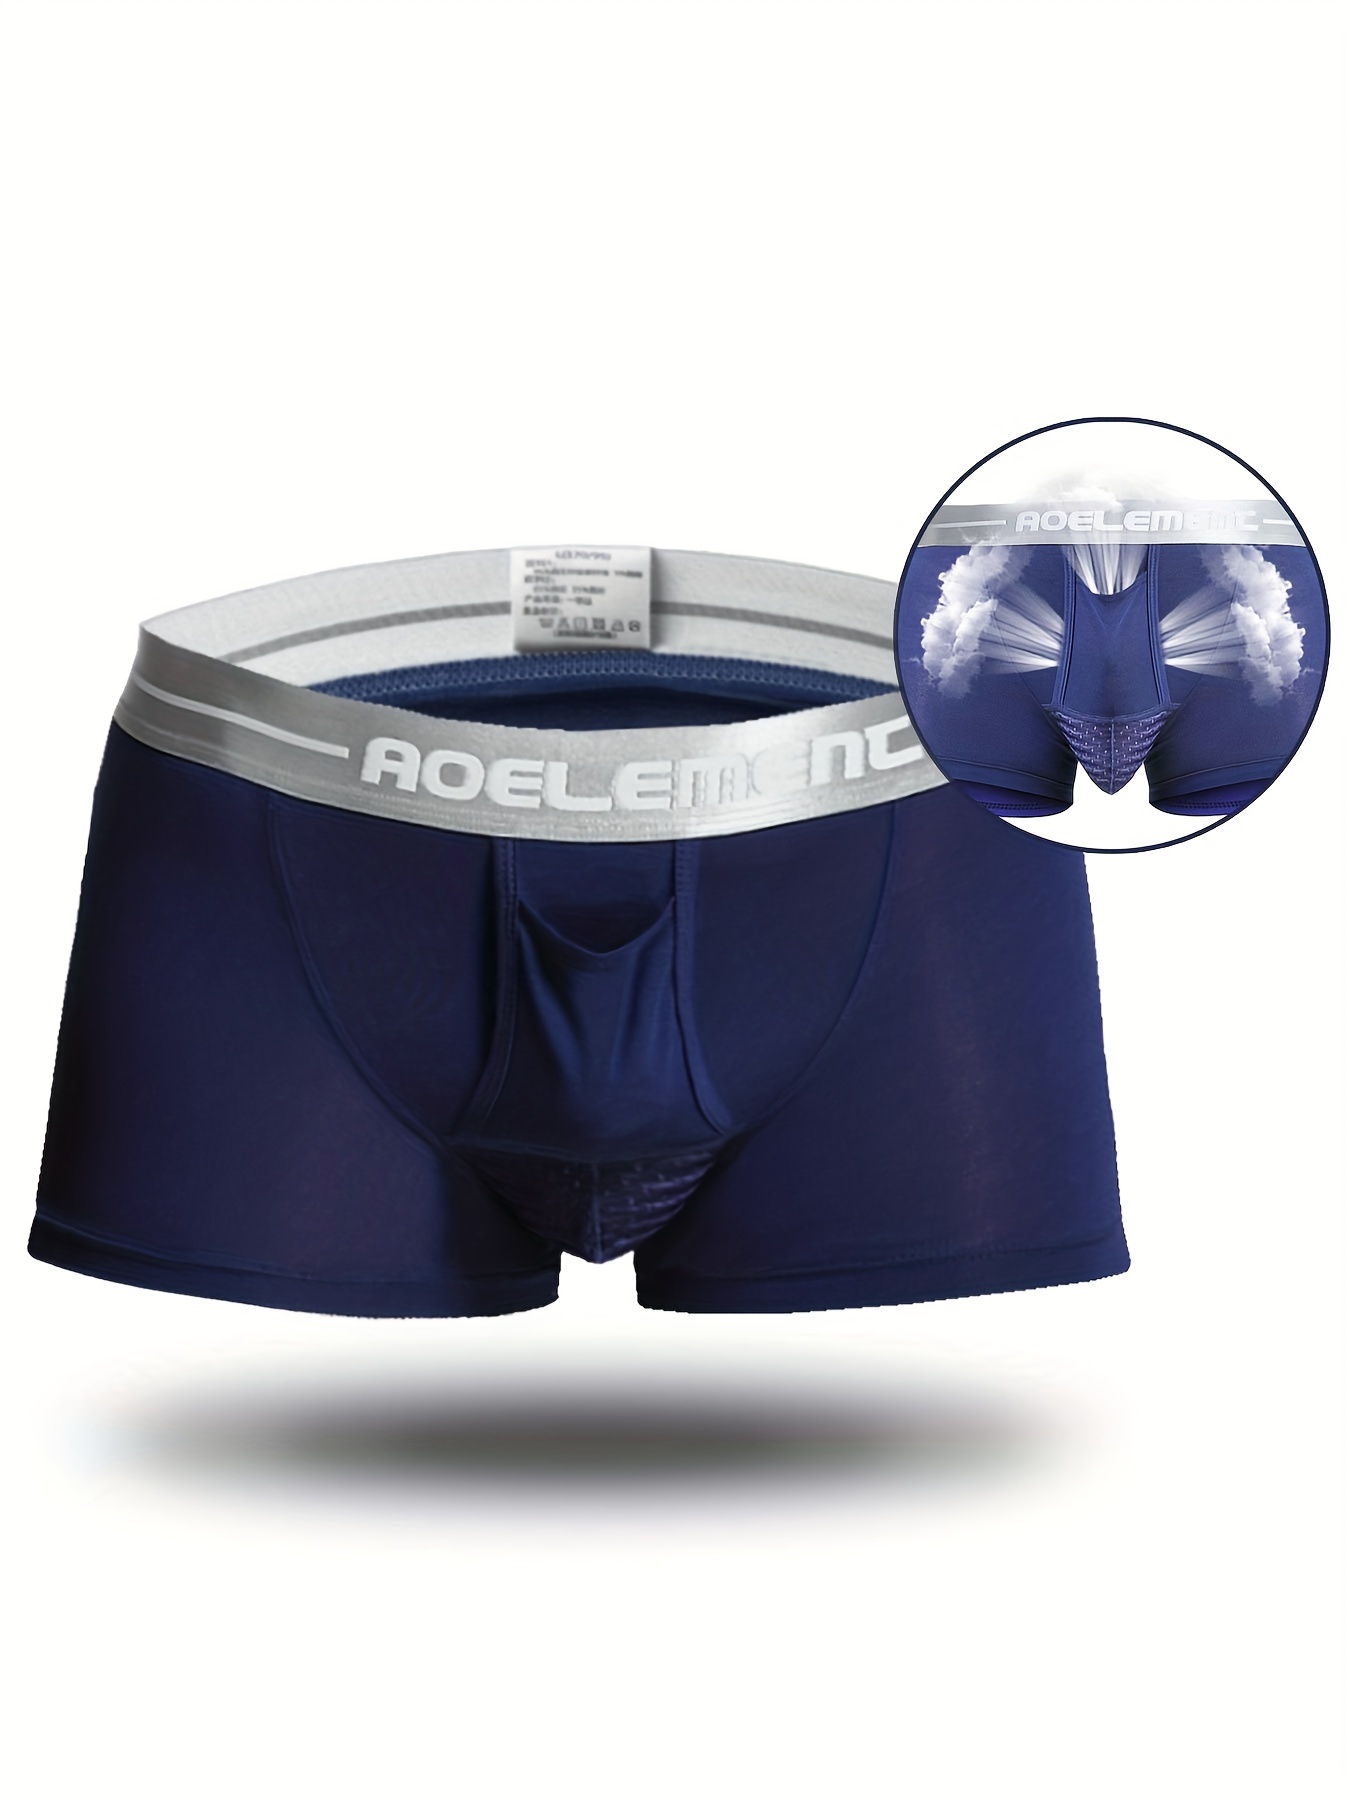 What Type of Underwear is Best for Varicocele Prevention? - Varicocele  Underwear